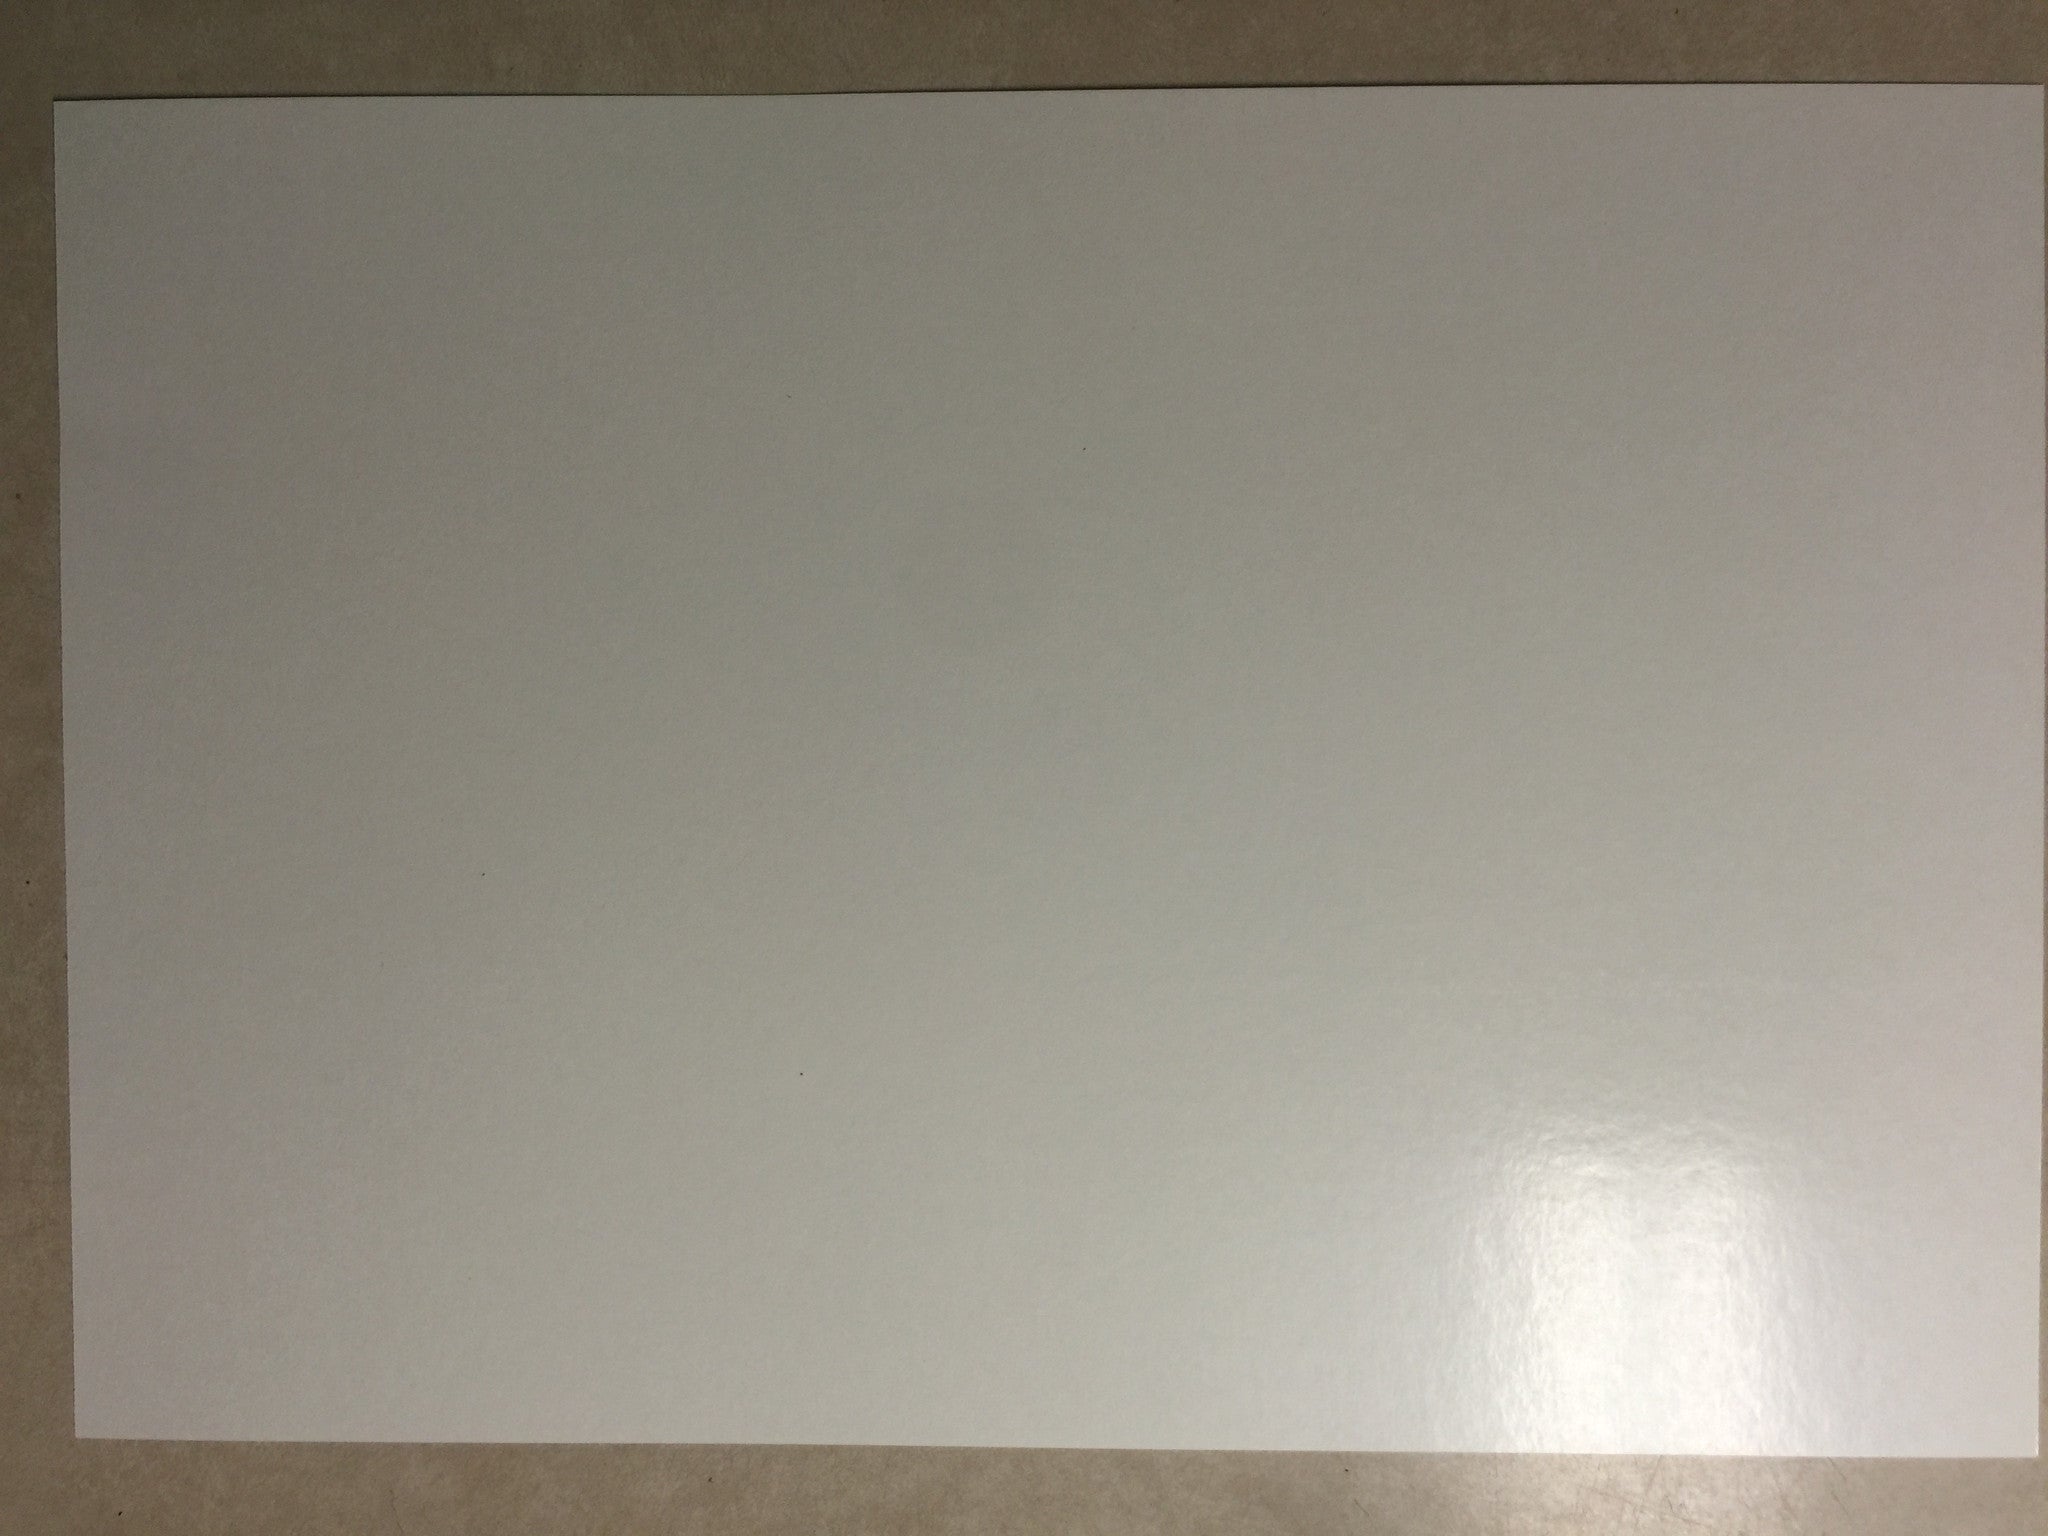 Large Disposable Cutting Board - 18 x 24 – Smoky Mountain Smokers